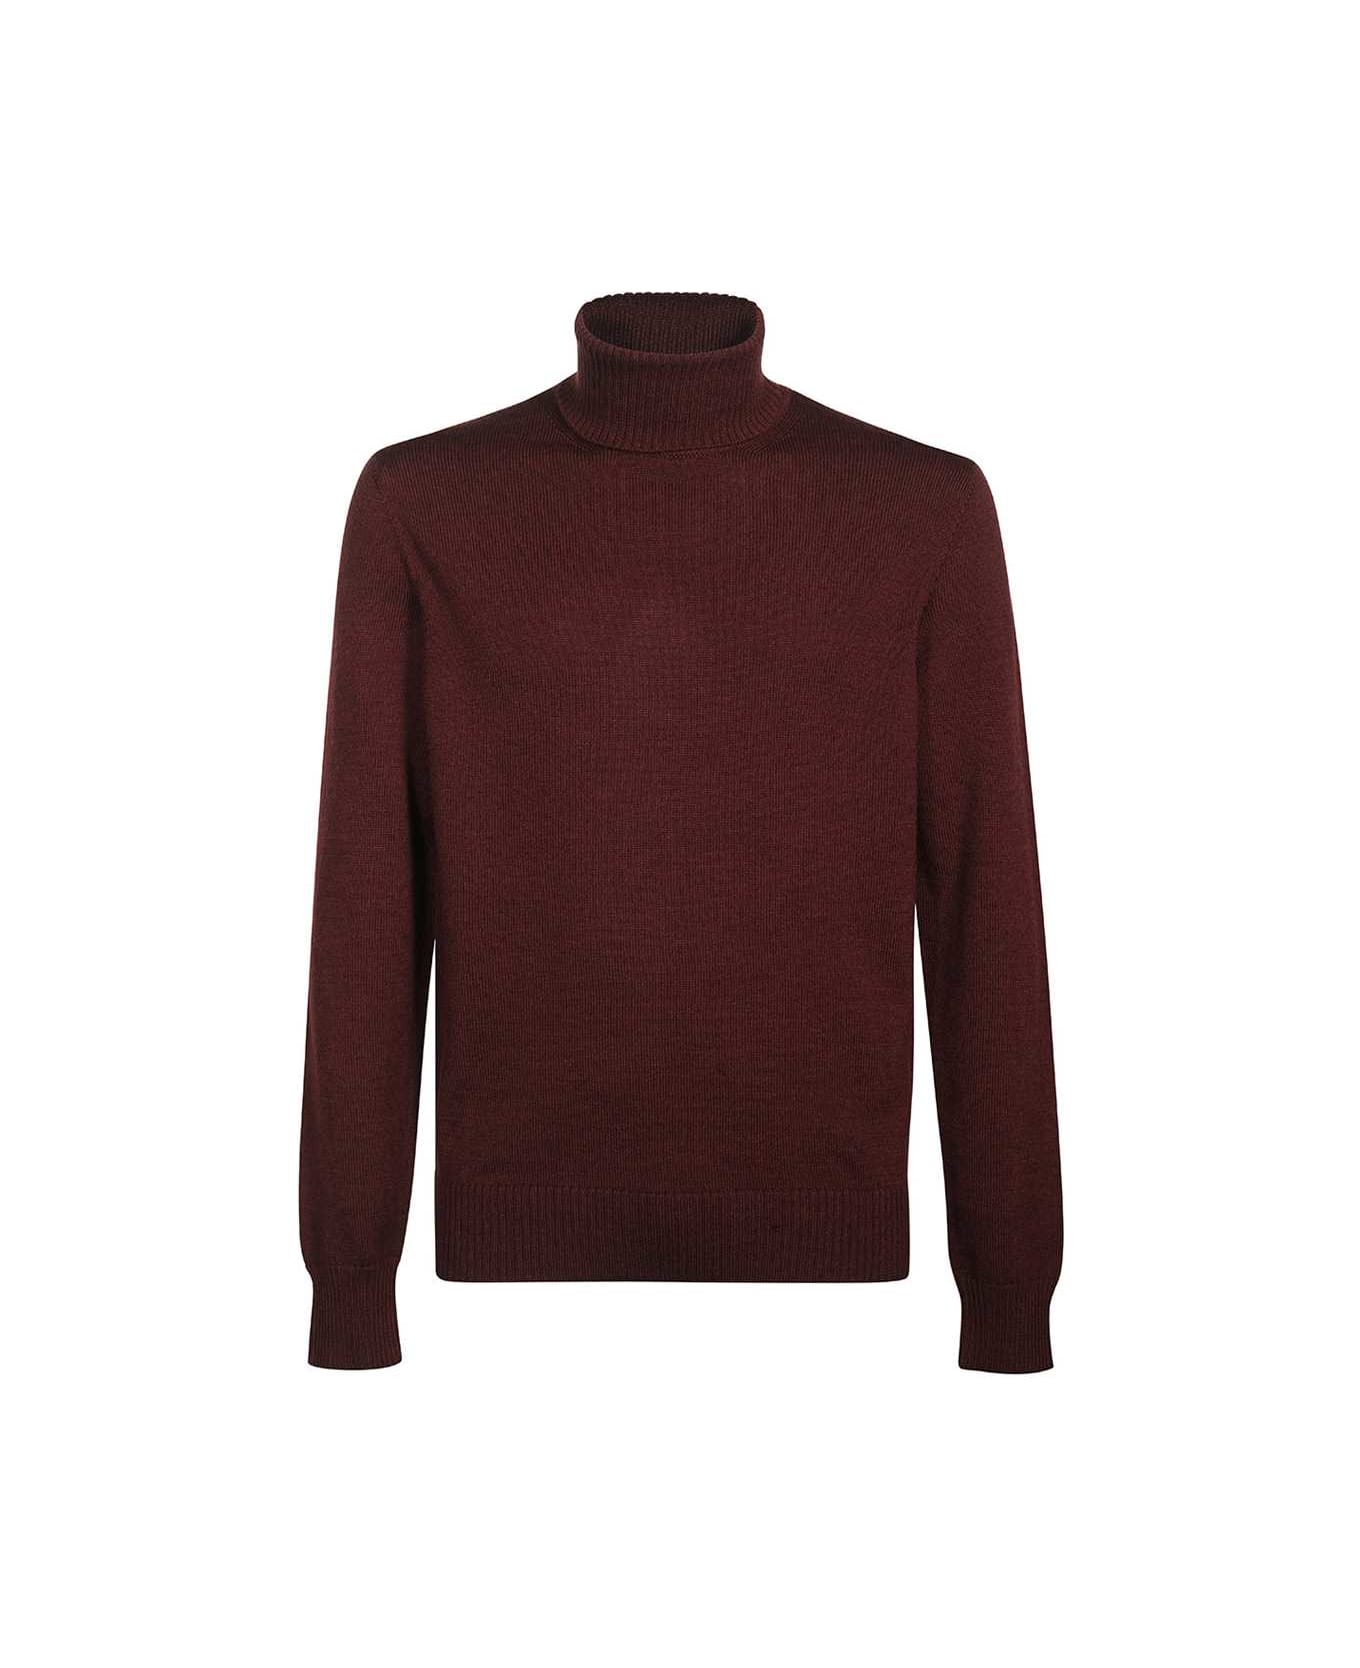 Emporio Armani Virgin Wool Turtleneck Sweater - Burgundy